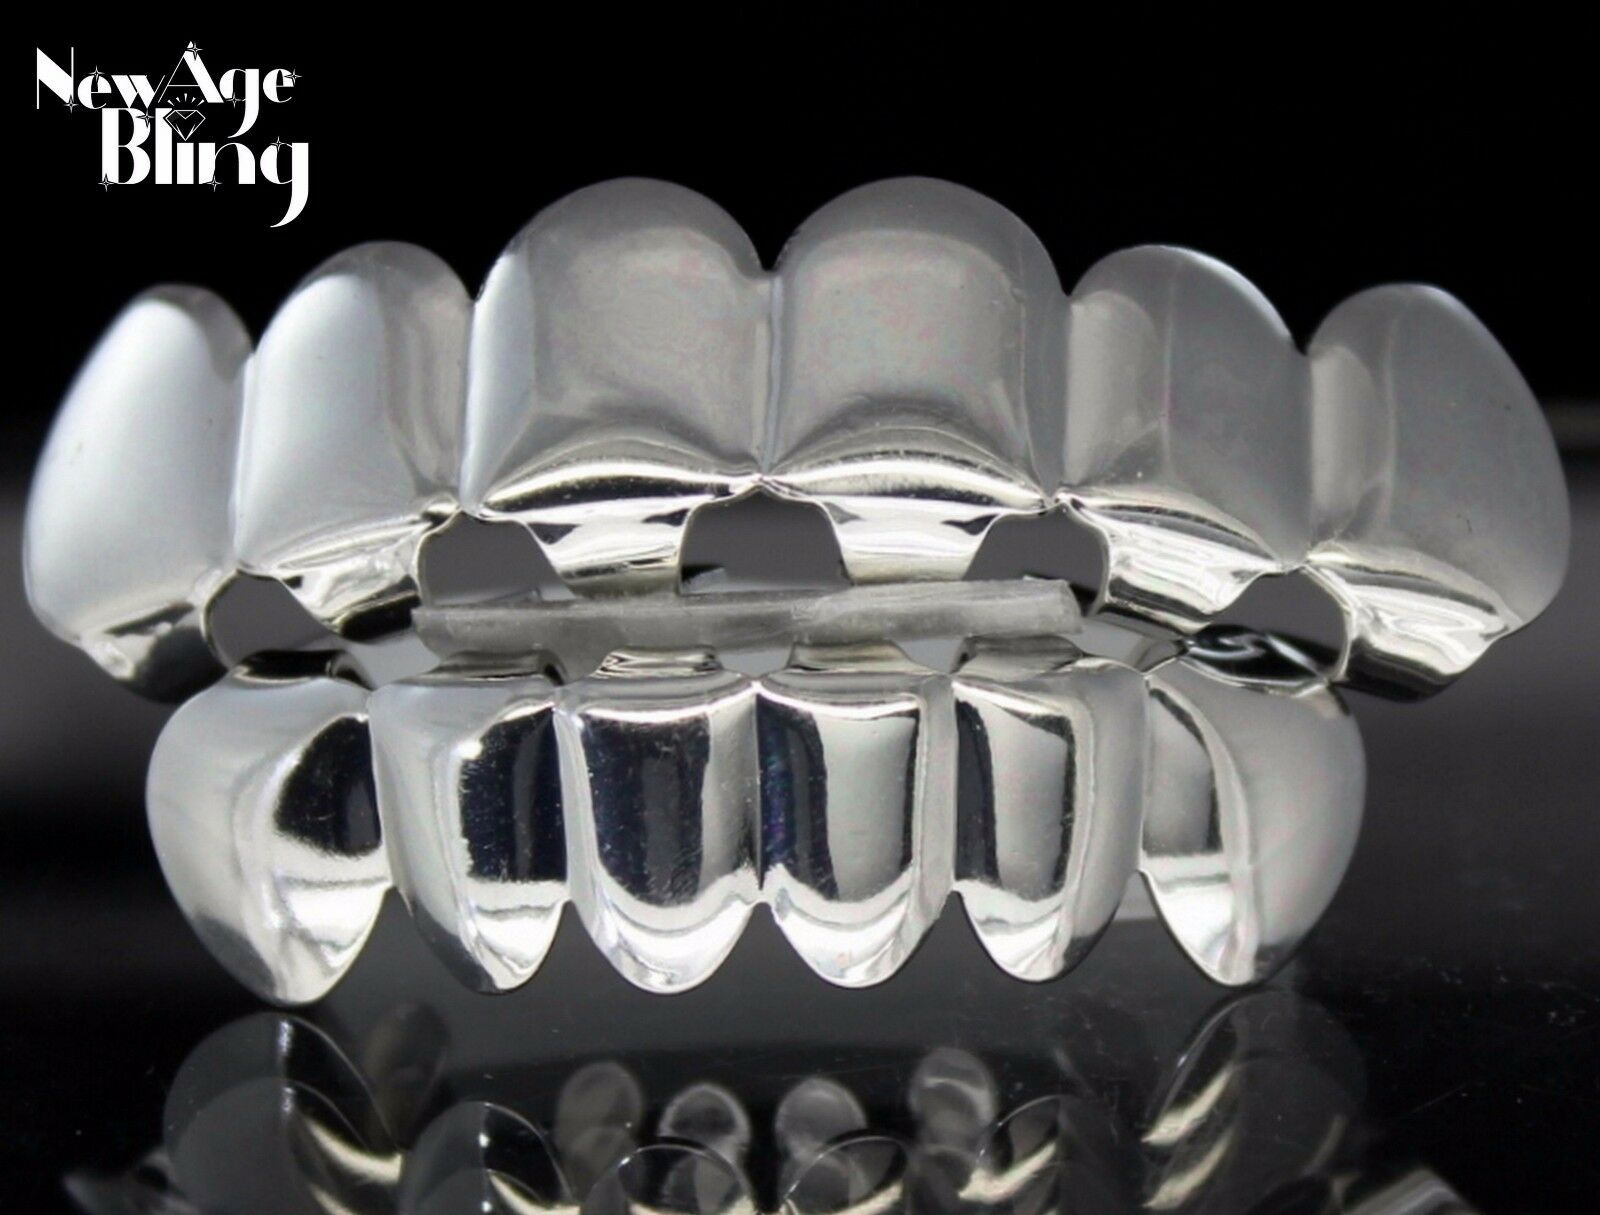 Custom Fit Silver Plated Joker Teeth Grillz Caps Top & Bottom Set Hip Hop Grill